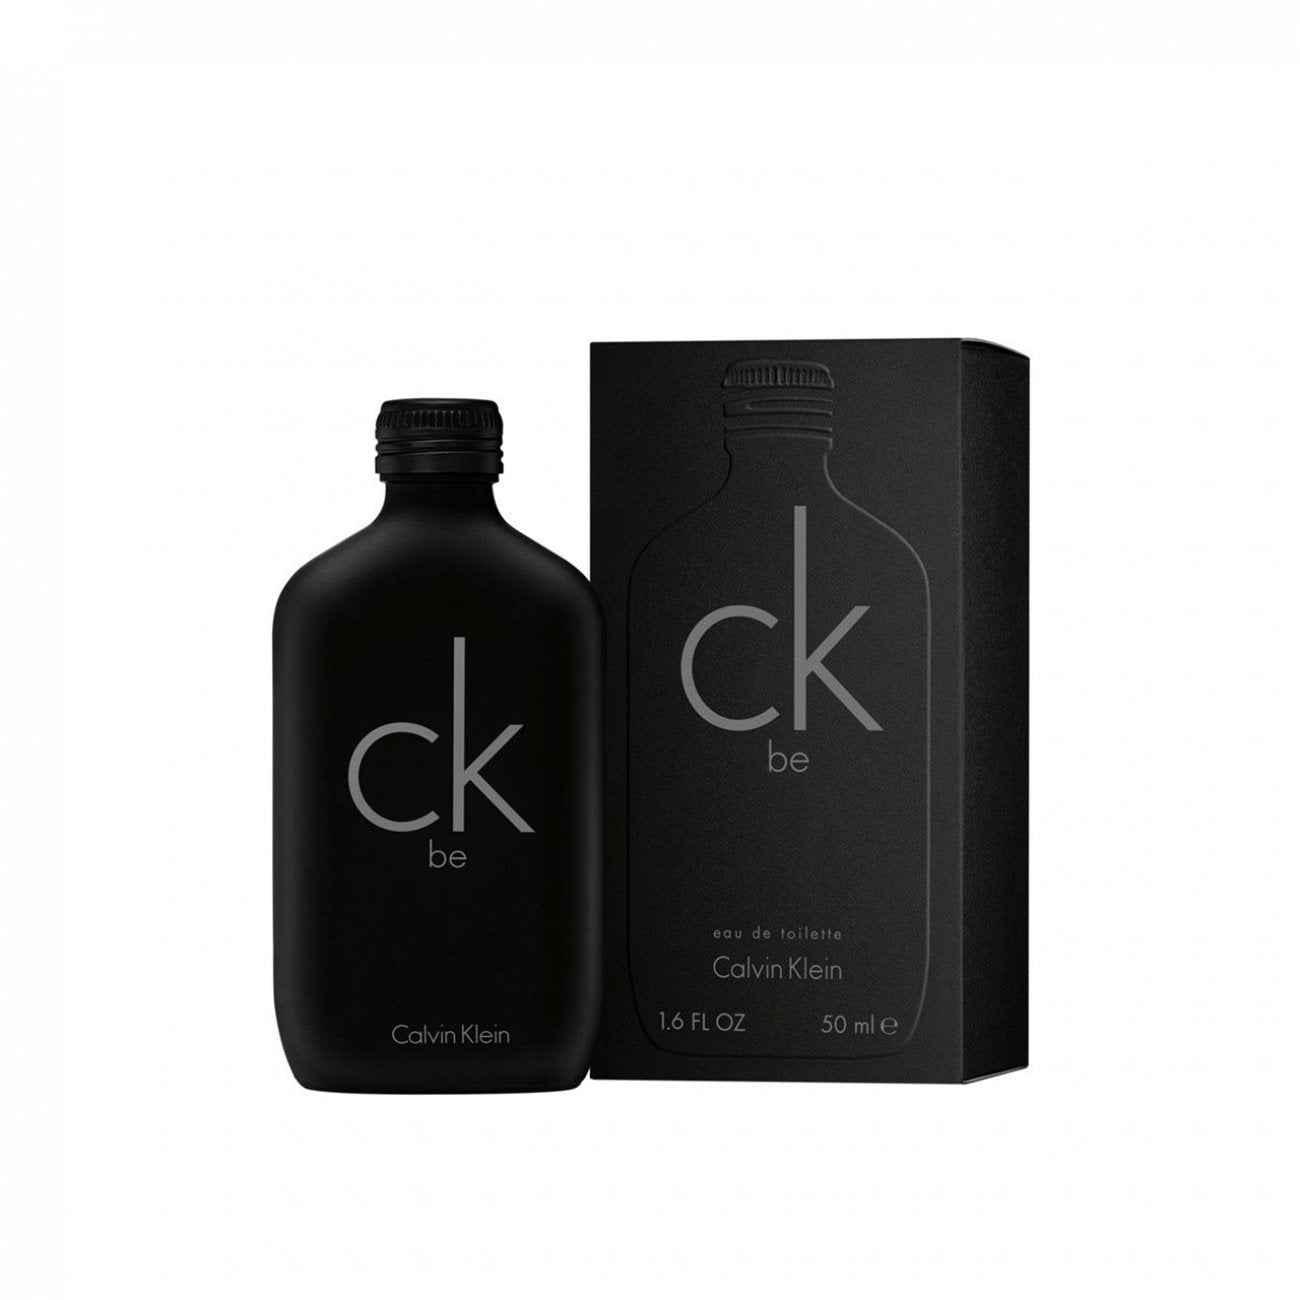 Calvin Klein CK Be EDT | My Perfume Shop Australia